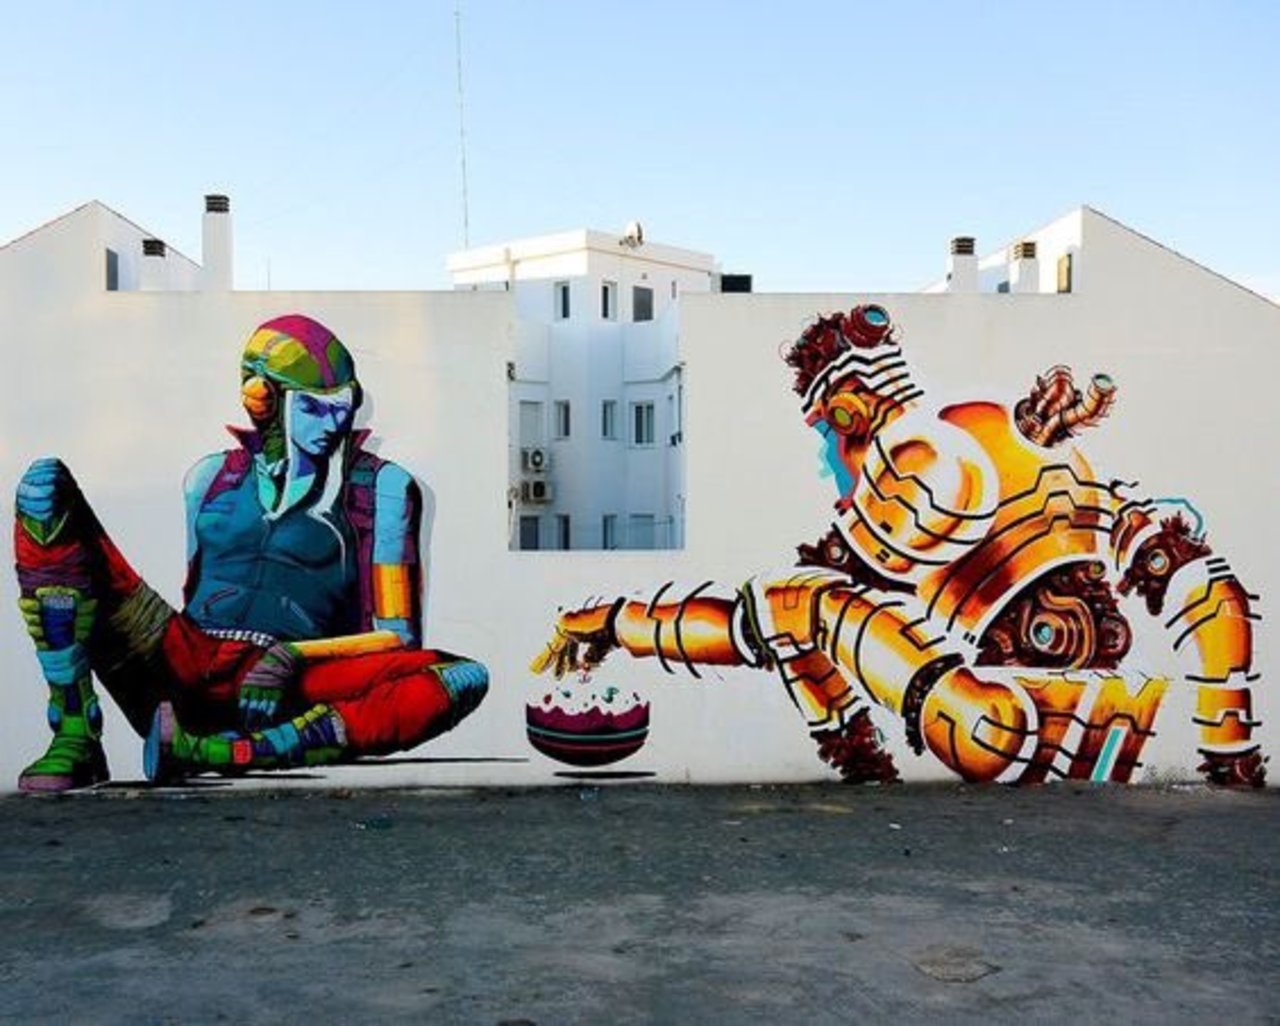 Post apocalypse life by Deih and Xelon in Murcia, Spain #Streetart #Art #postapocalyptic #Beauty #Graffiti #Mural #Murcia #arteurbano #DesignThinking https://t.co/4MET6o1x4R